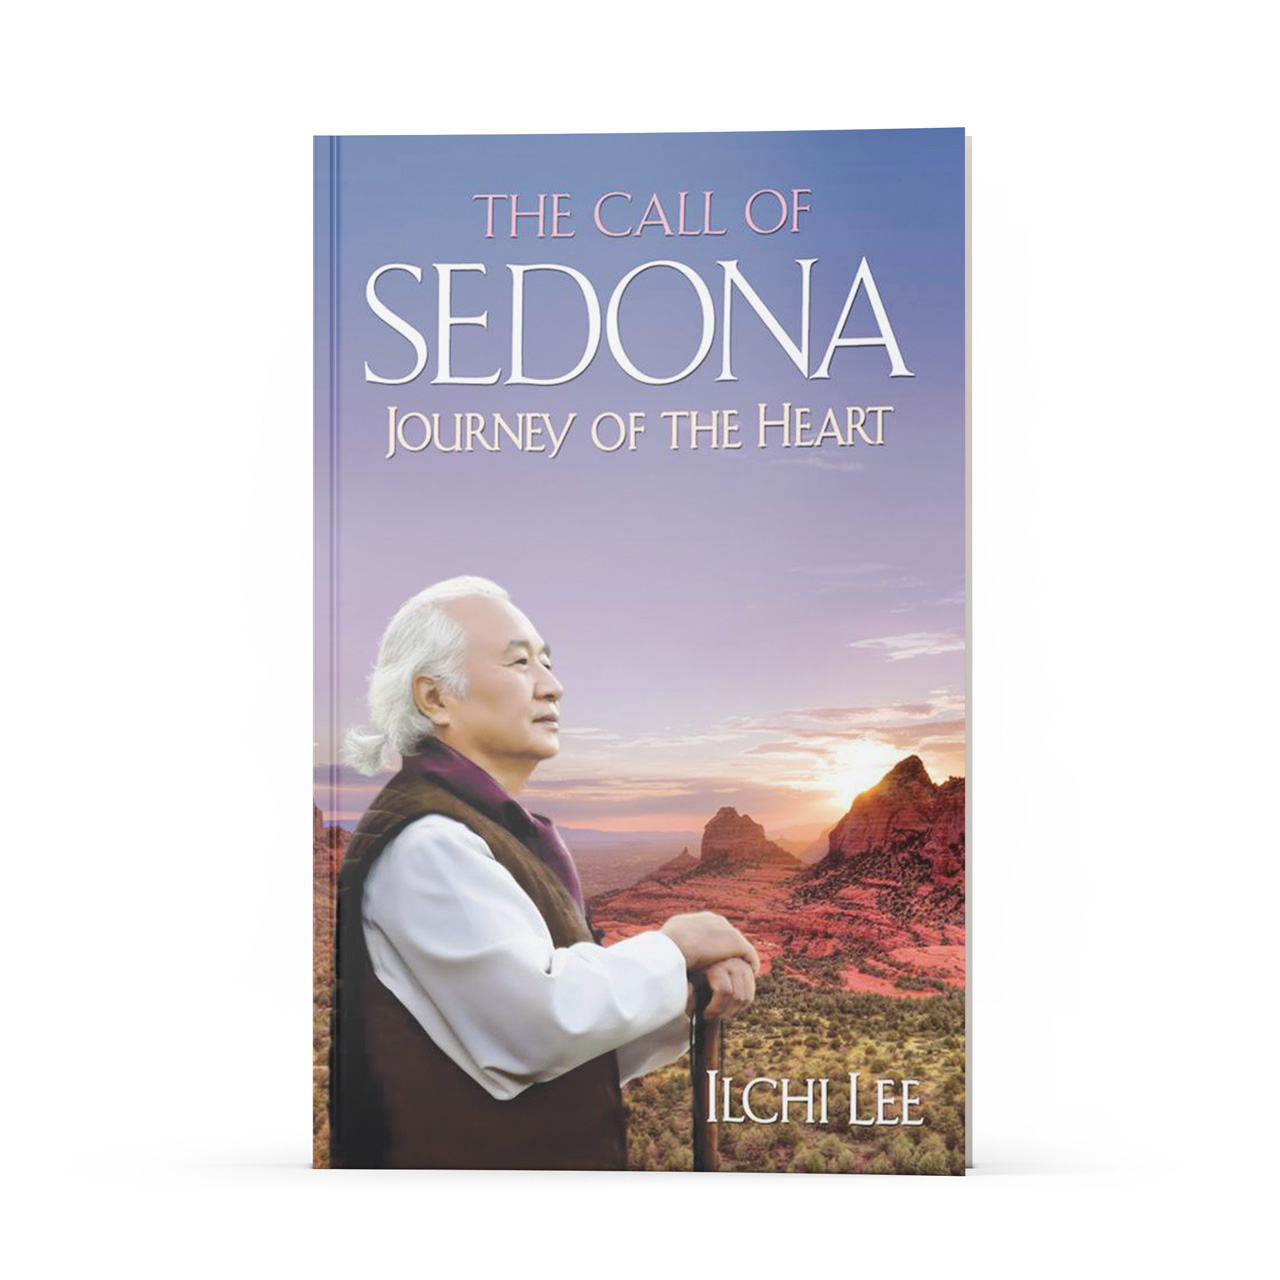 The Call of Sedona